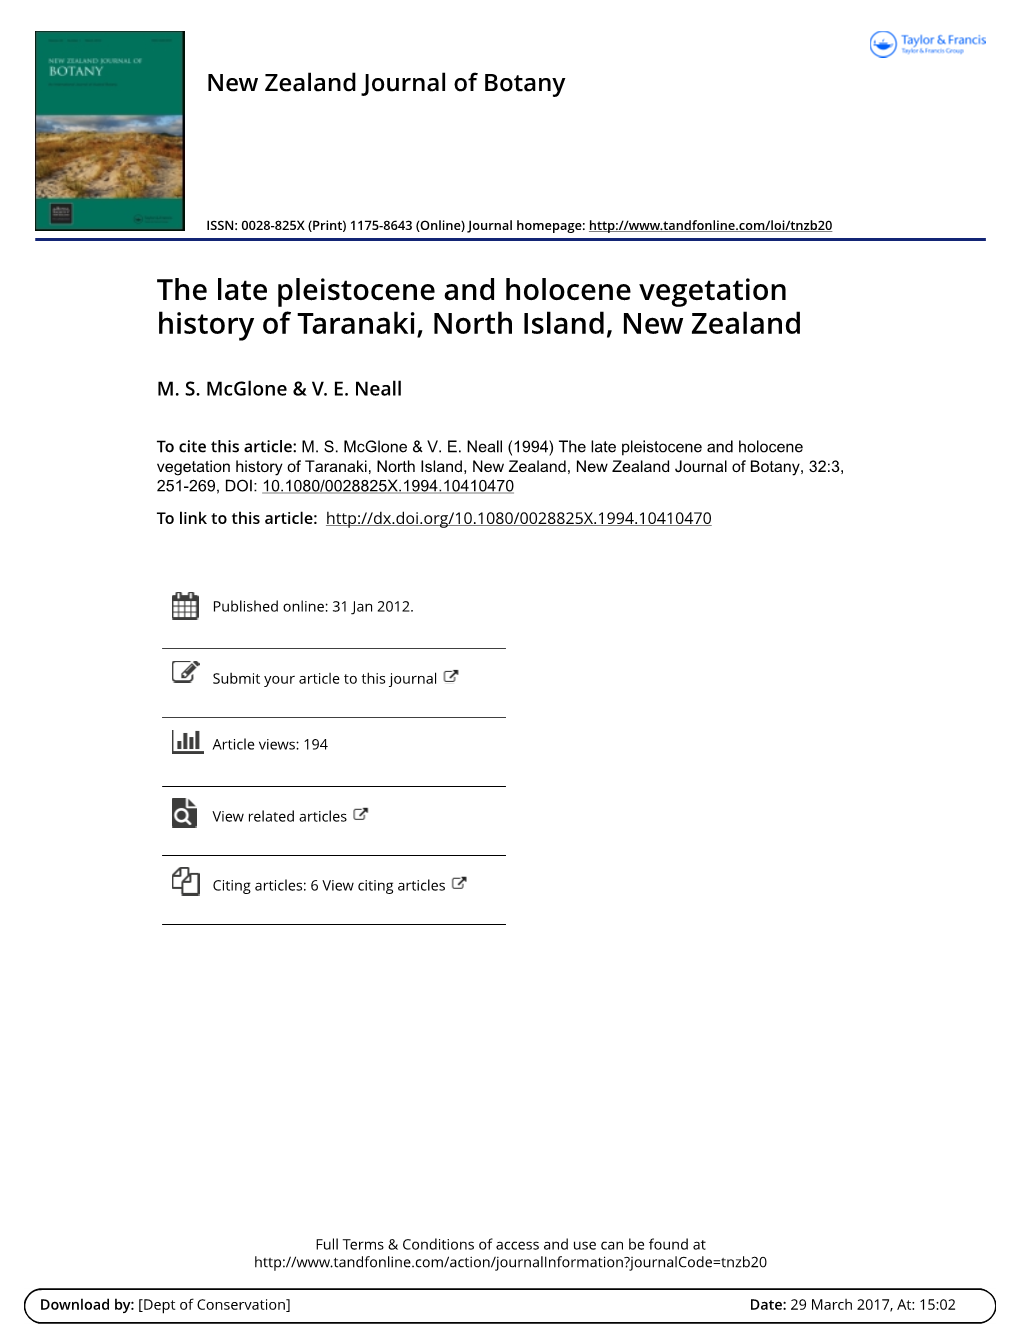 The Late Pleistocene and Holocene Vegetation History of Taranaki, North Island, New Zealand